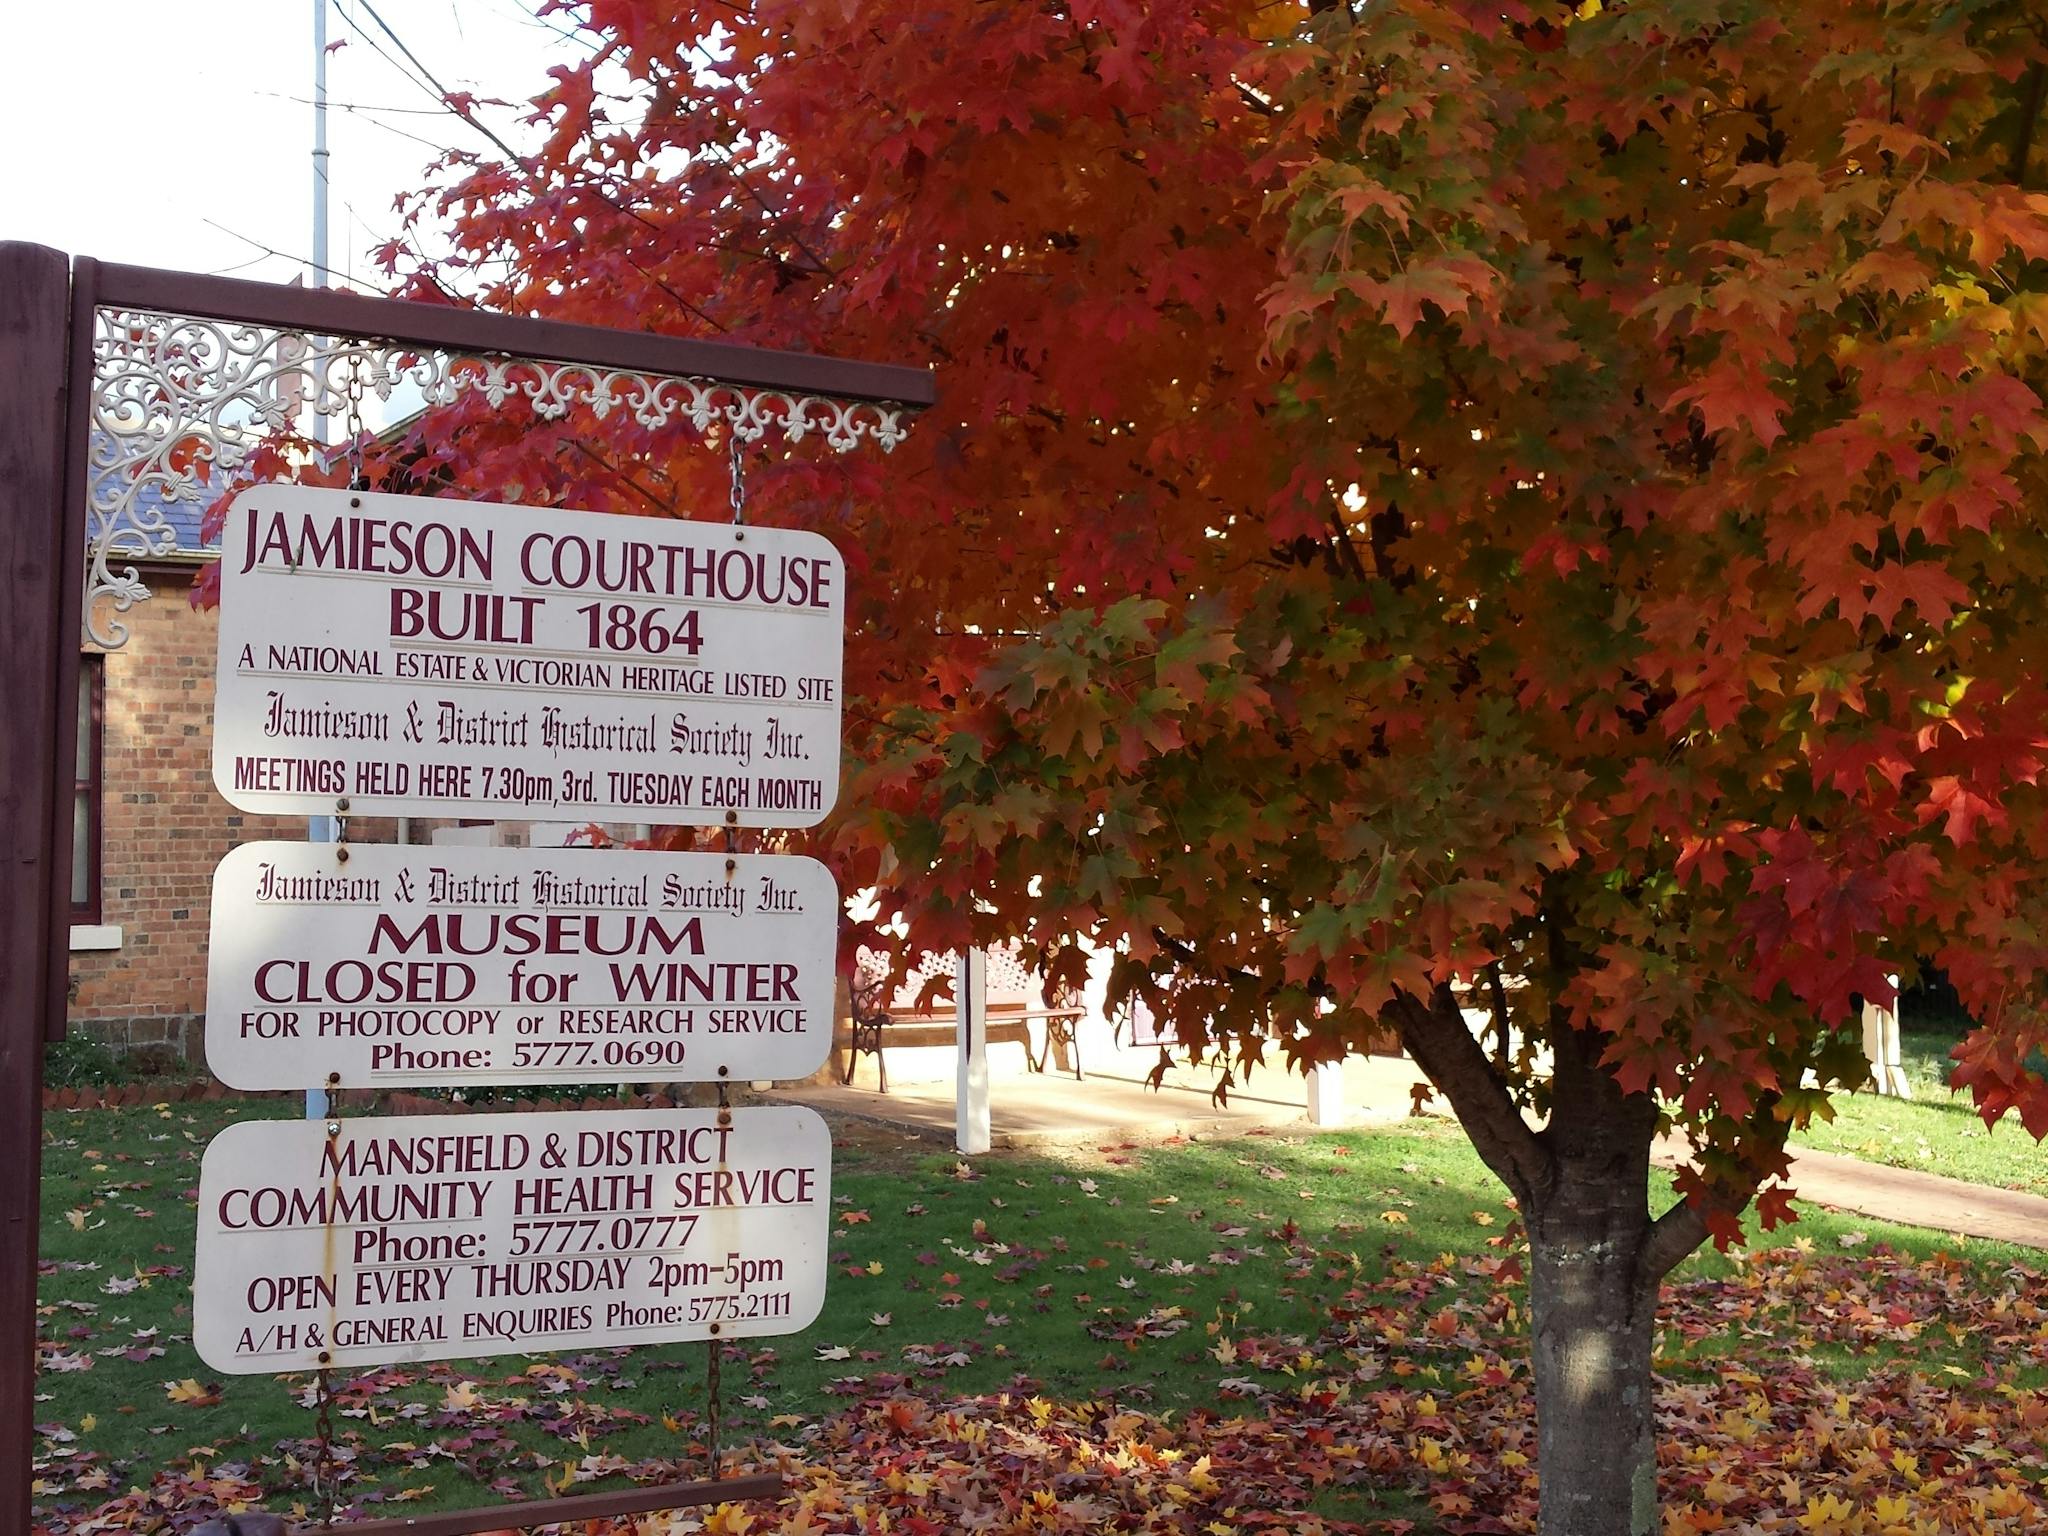 Jamieson Courthouse